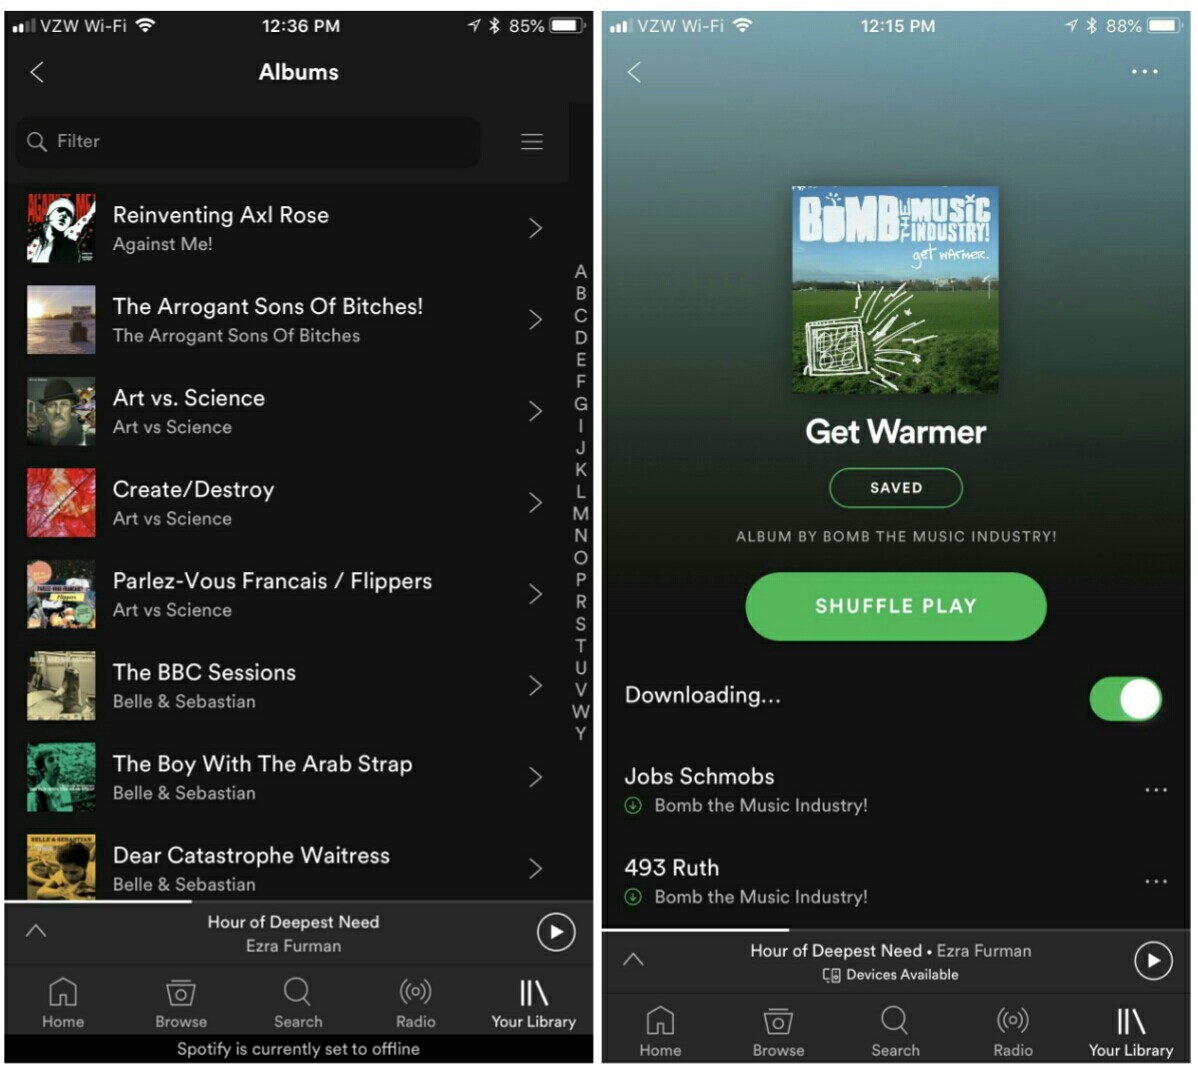 Free Spotify Premium Sonos